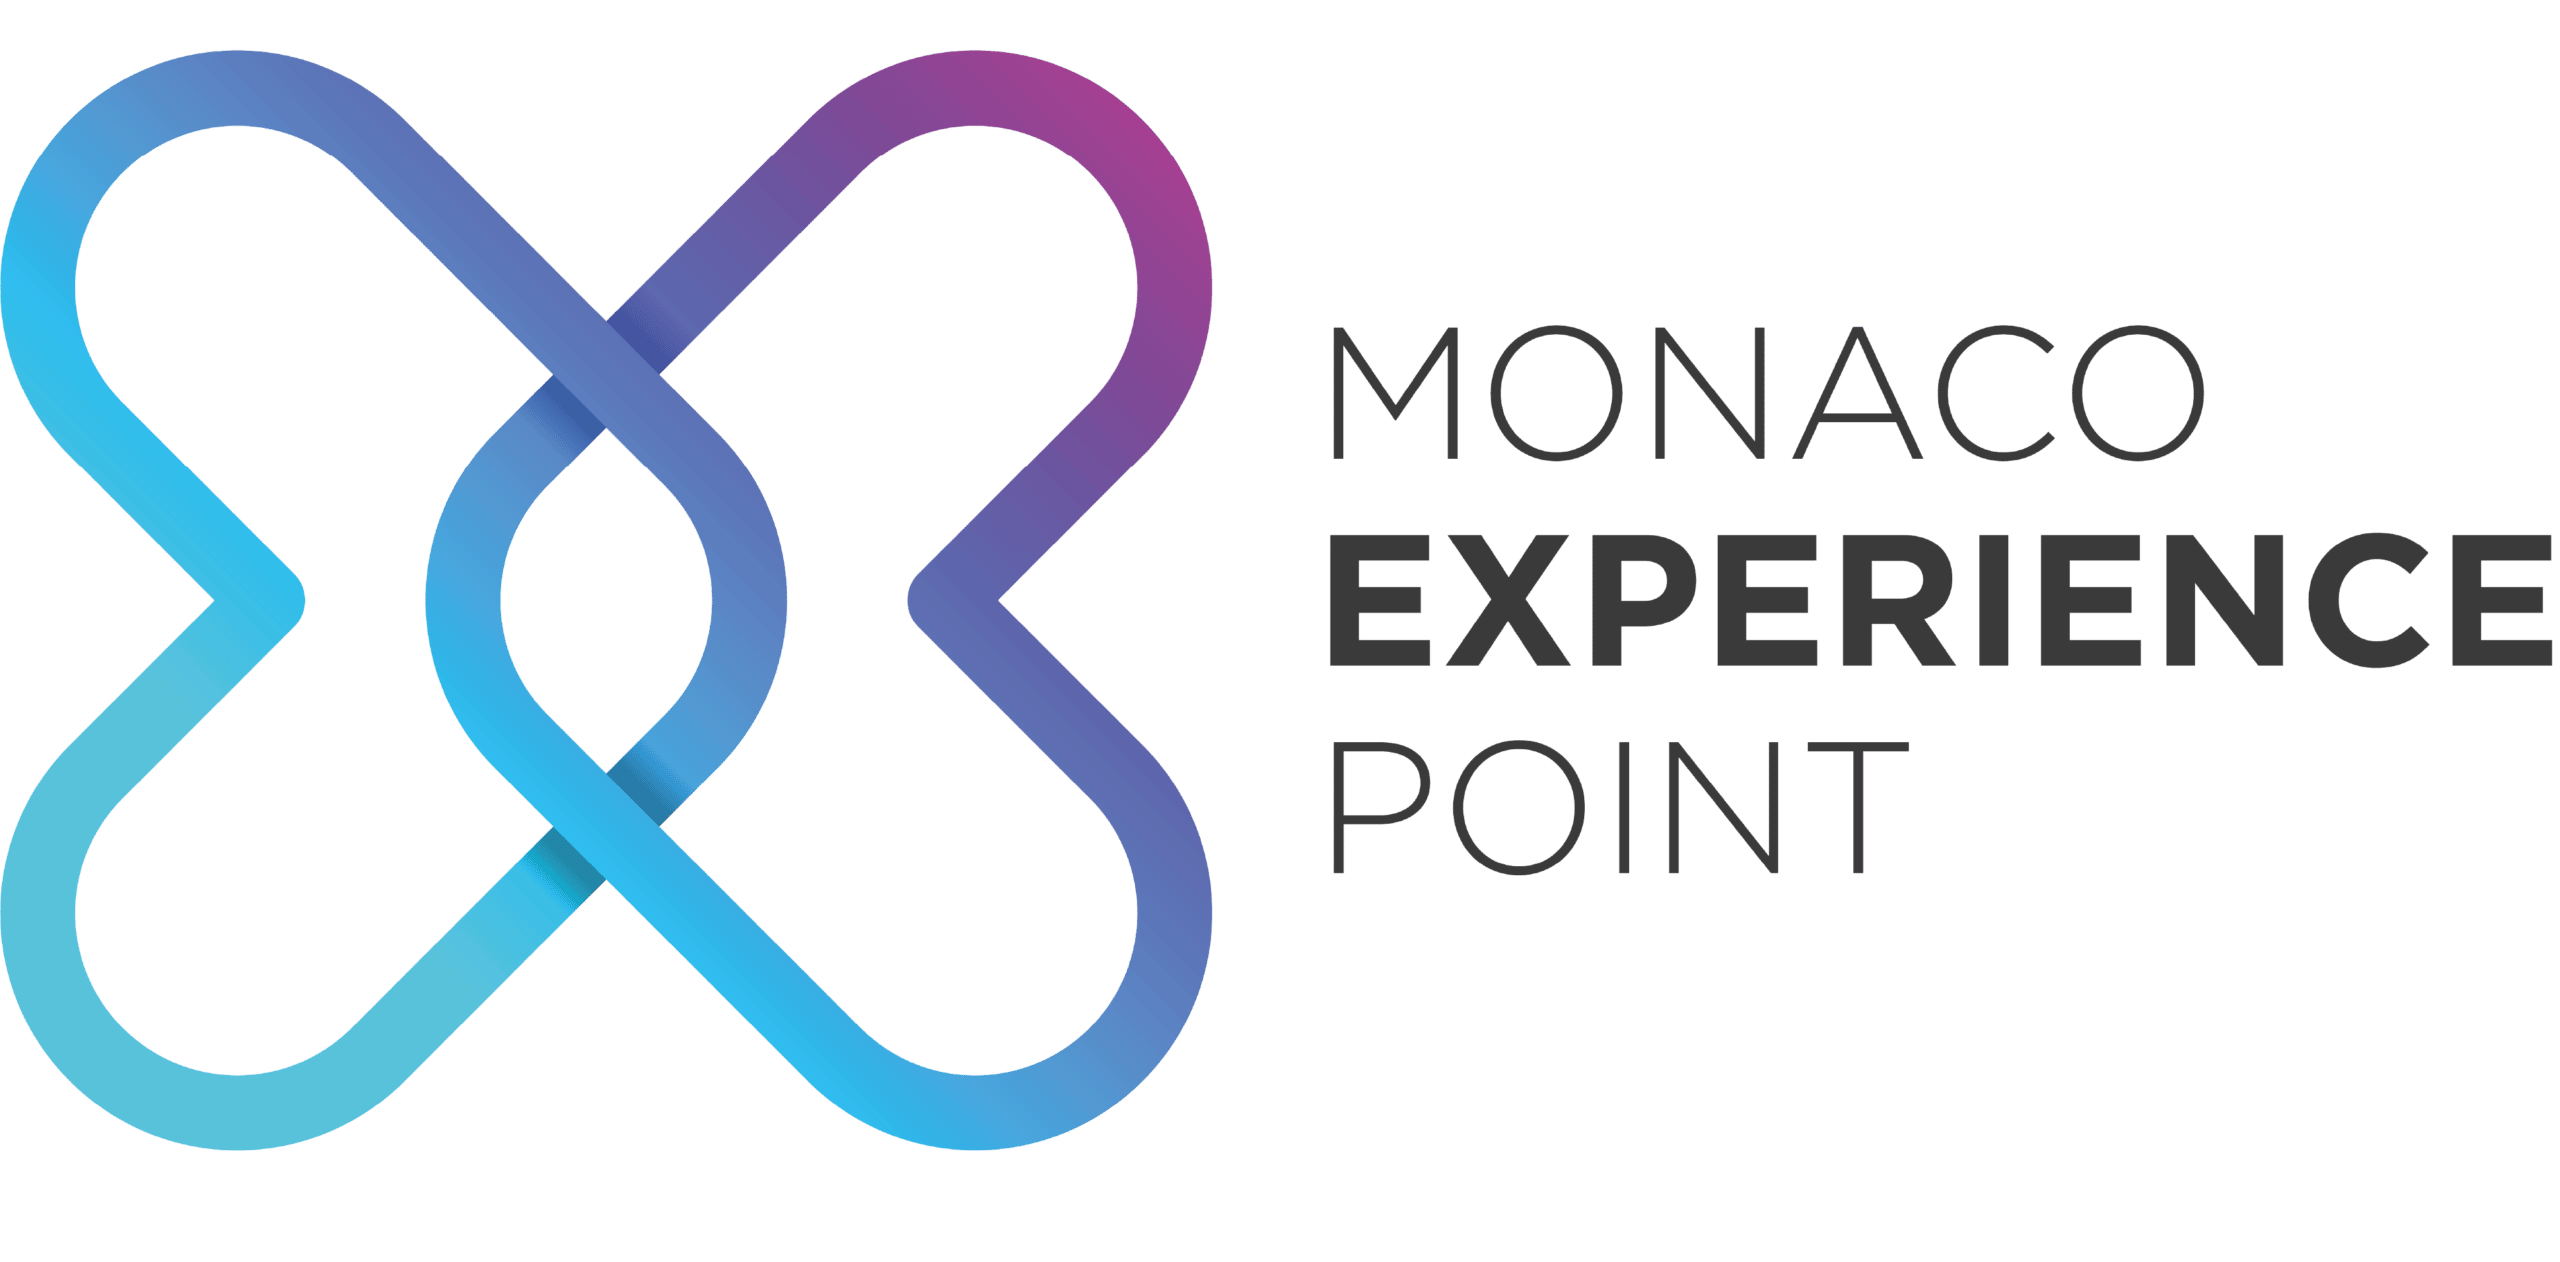 https://tendances.media/wp-content/uploads/2022/05/monaco-experience-poiint.png